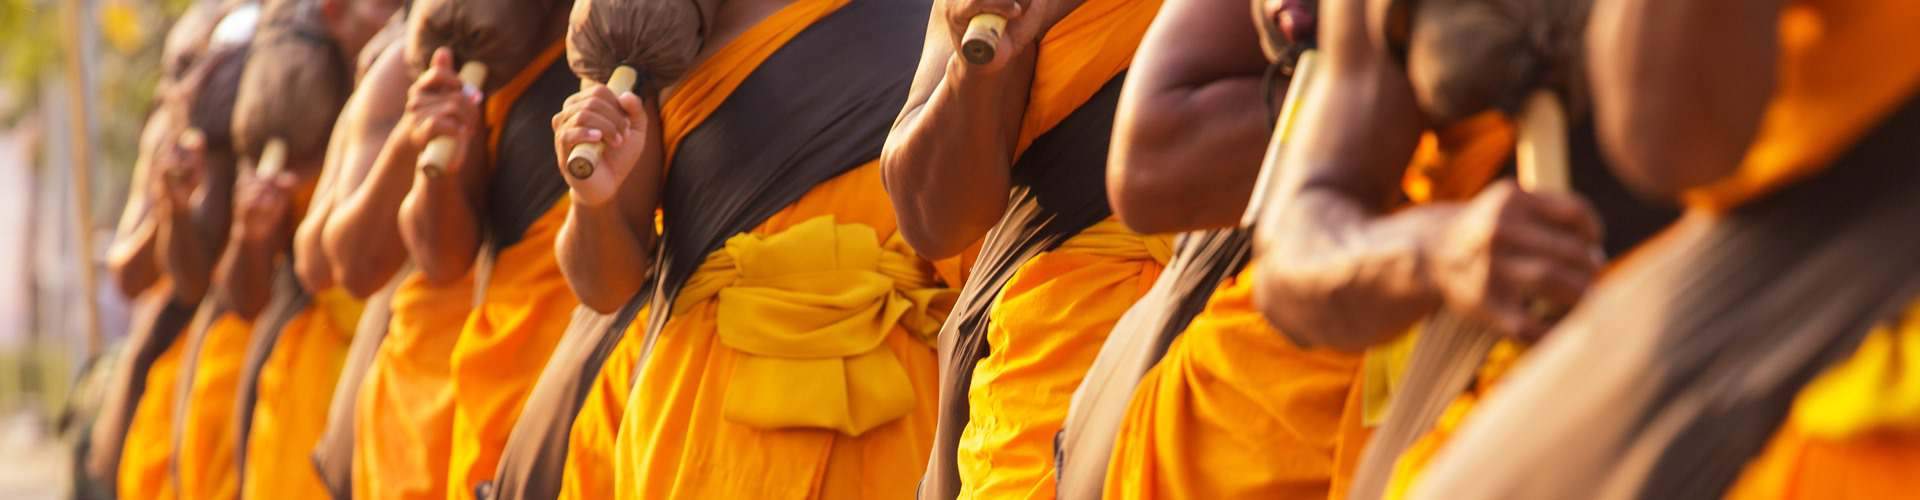 Ayutthaya Monks